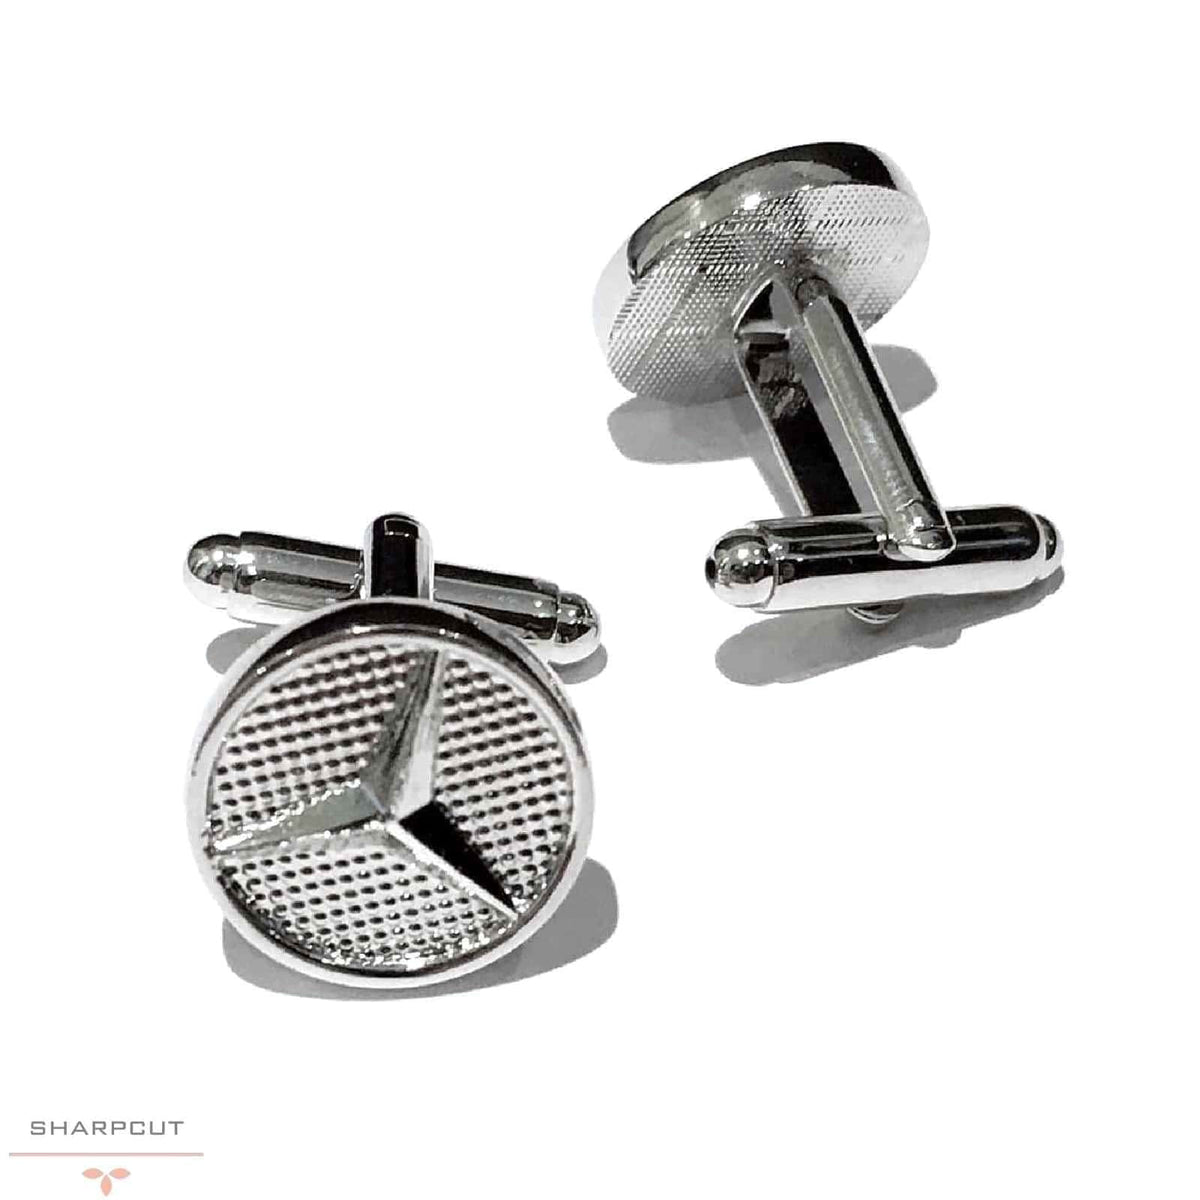 Mercedes Benz Silver Cufflinks $29.99 sharpcut